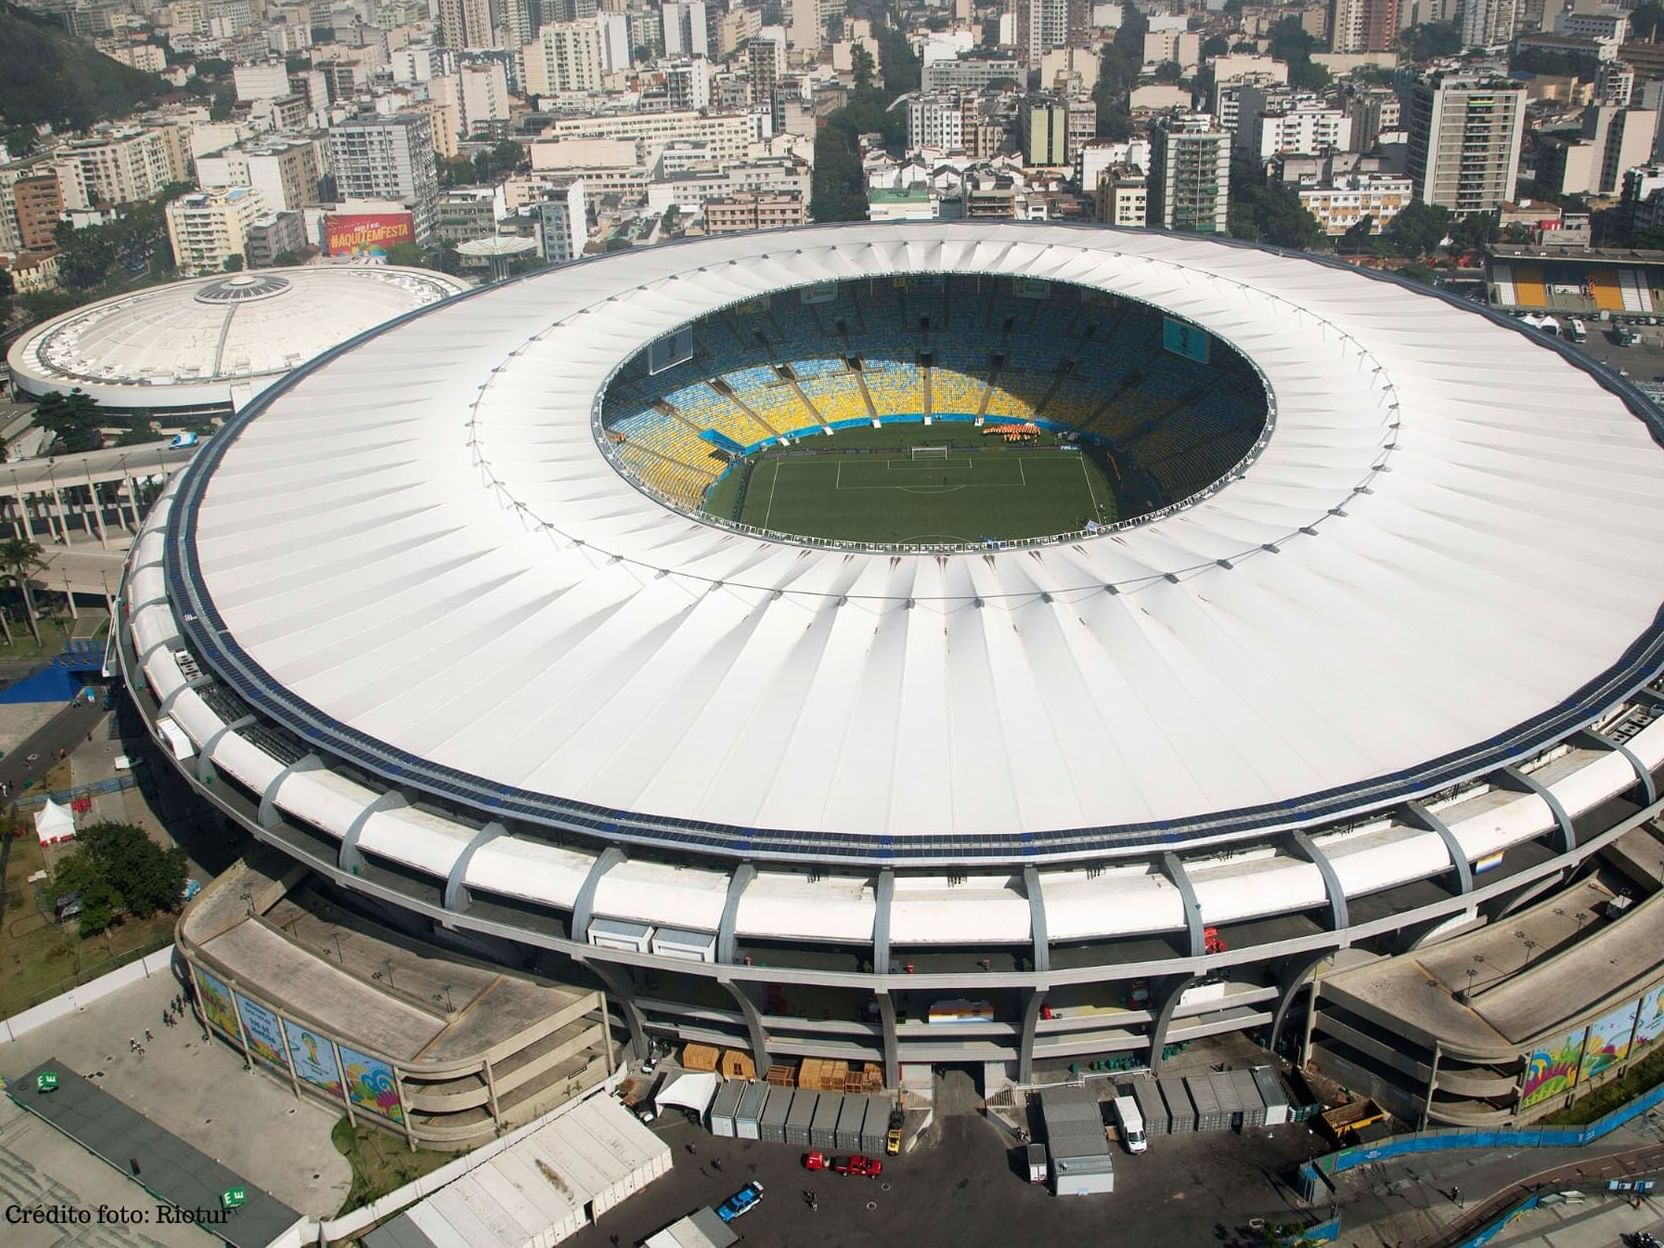 Bird's-eye view of Maracana stadium near Sol Ipanema Hotel